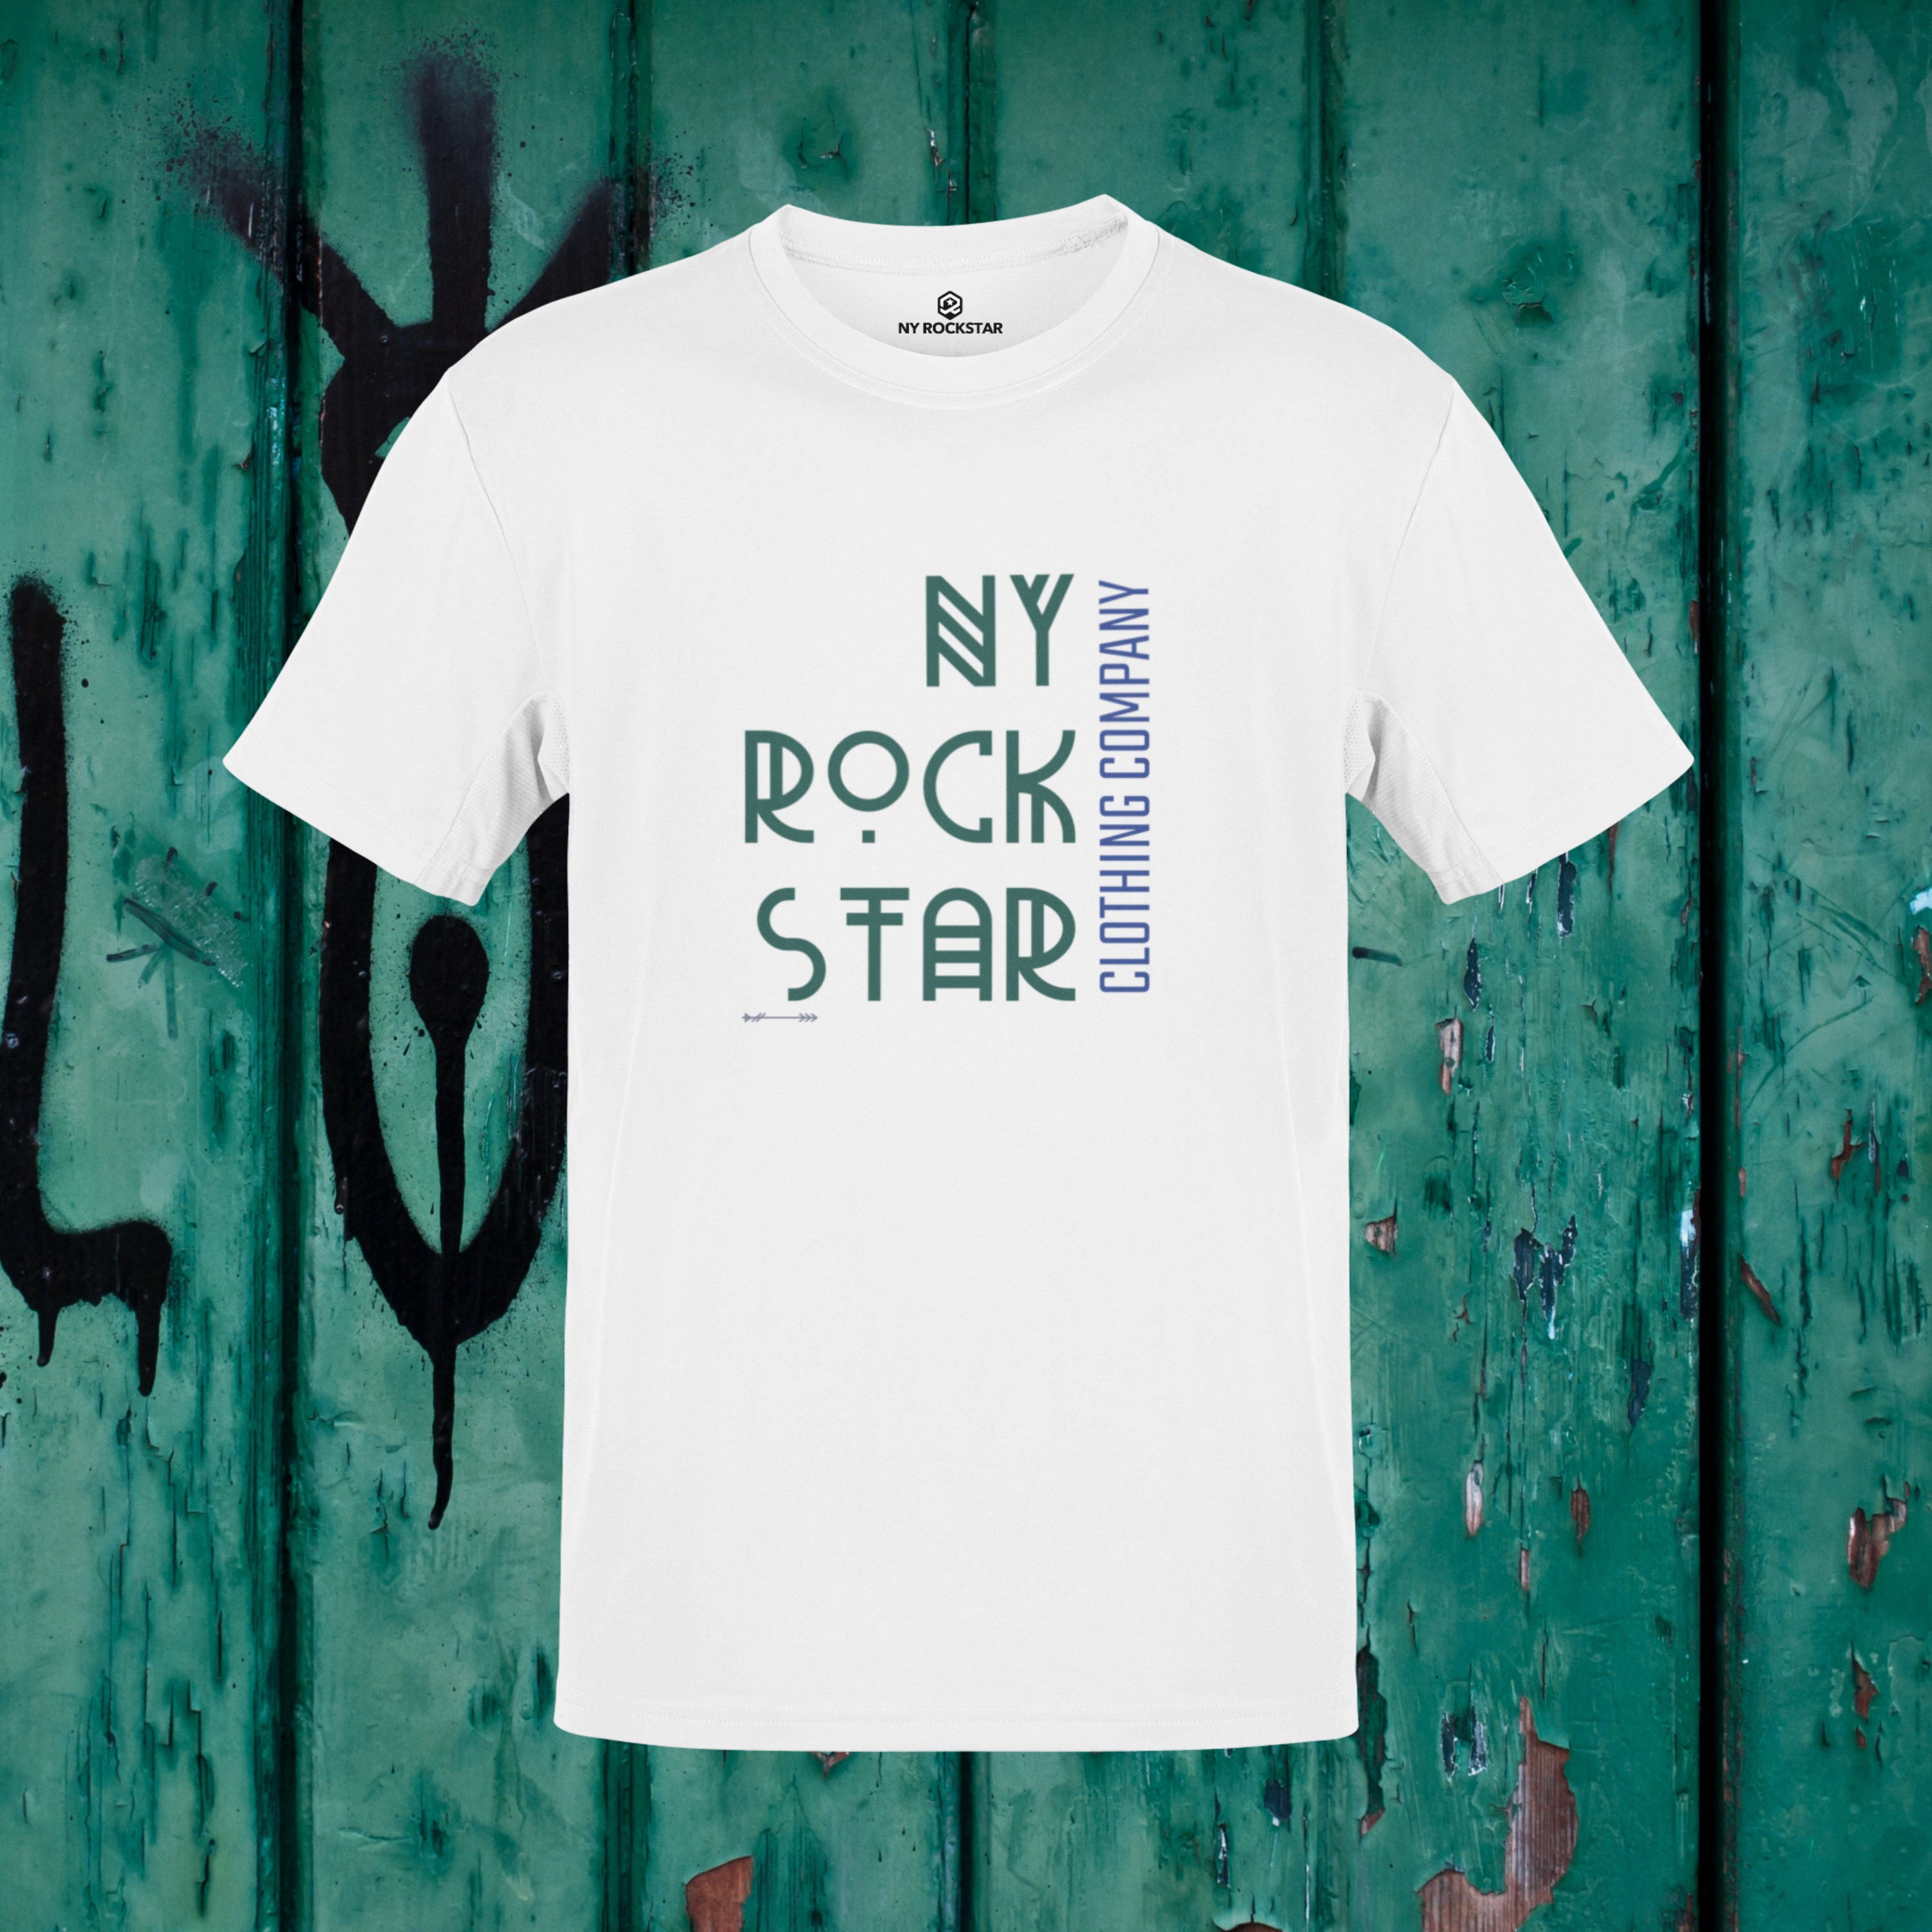 rockstar tour shirts